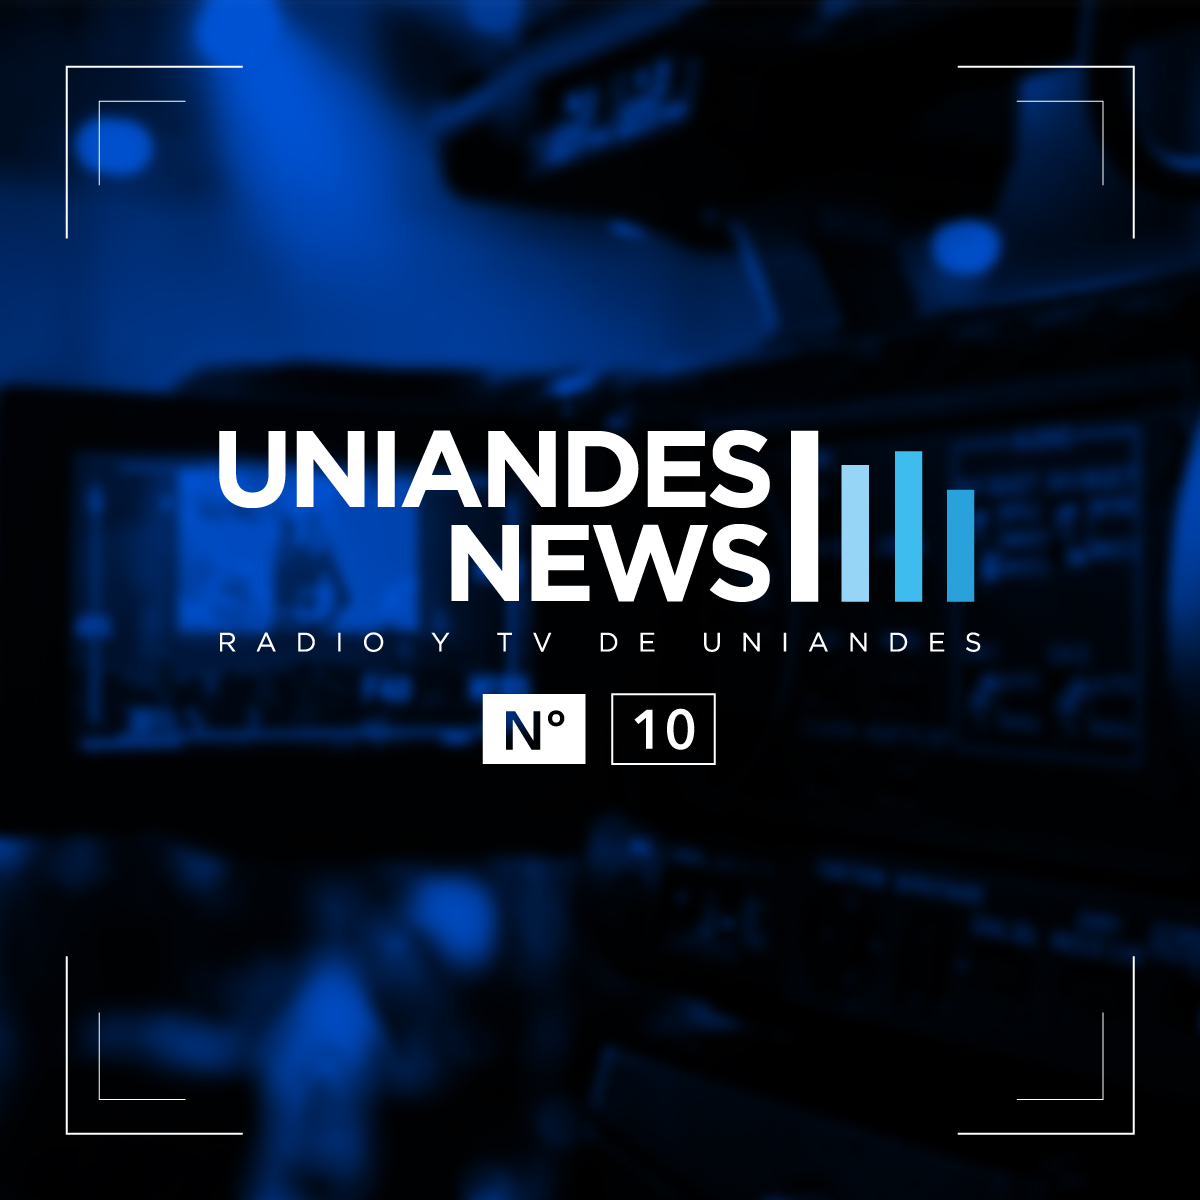 Uniandes News 10